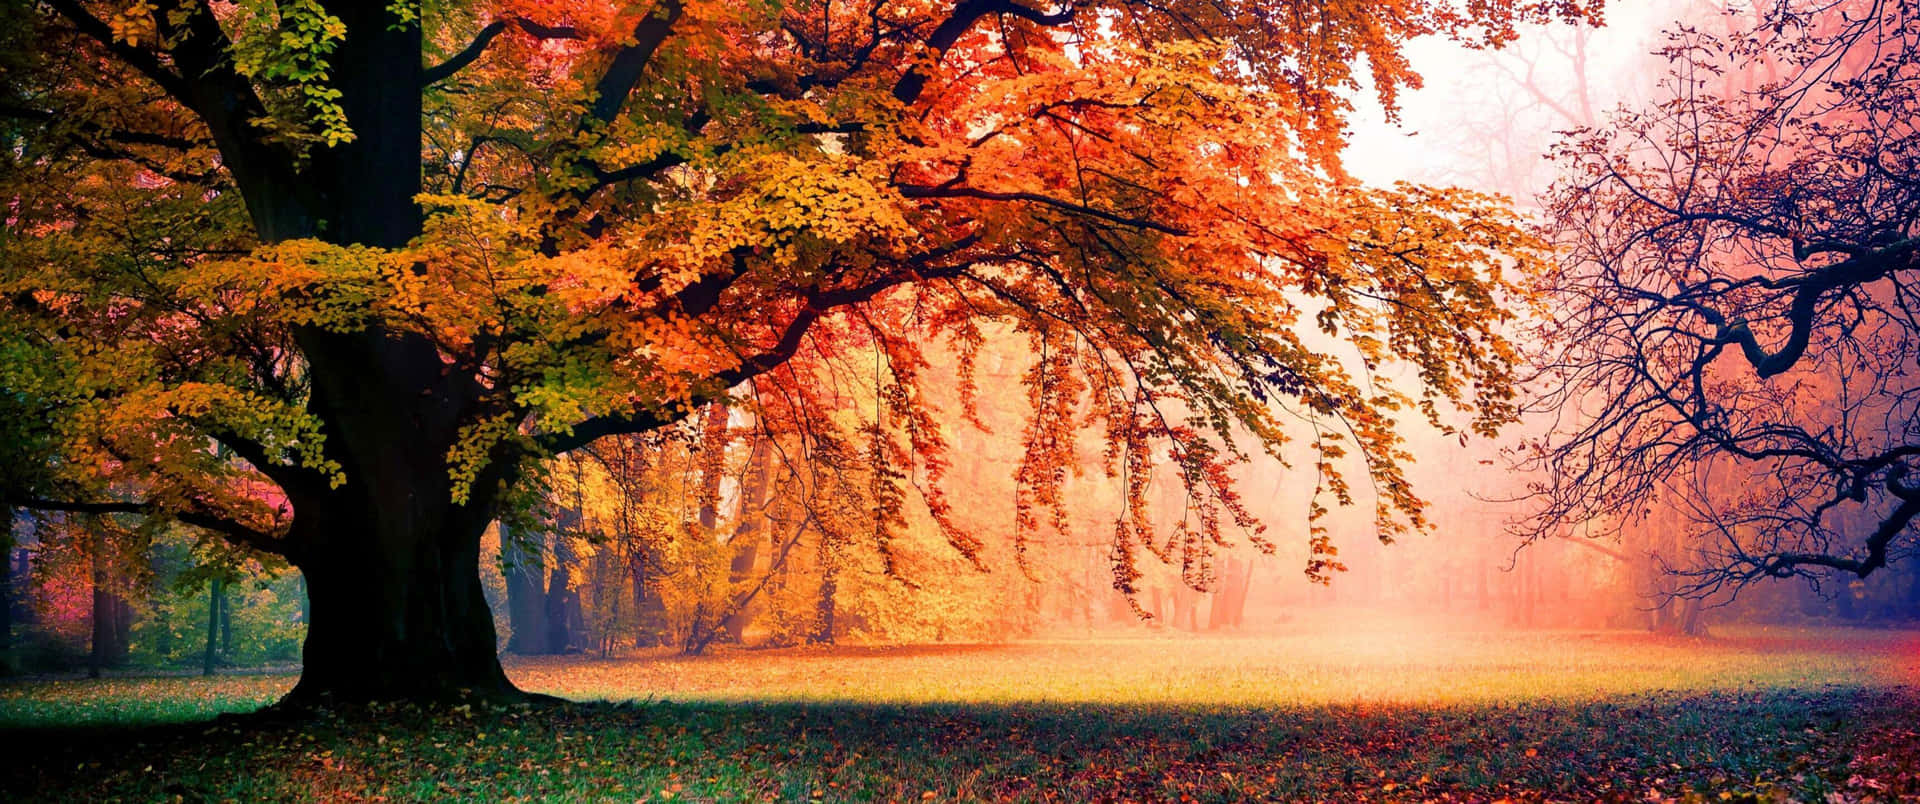 "Celebrate the season with a beautiful autumn backdrop!" Wallpaper